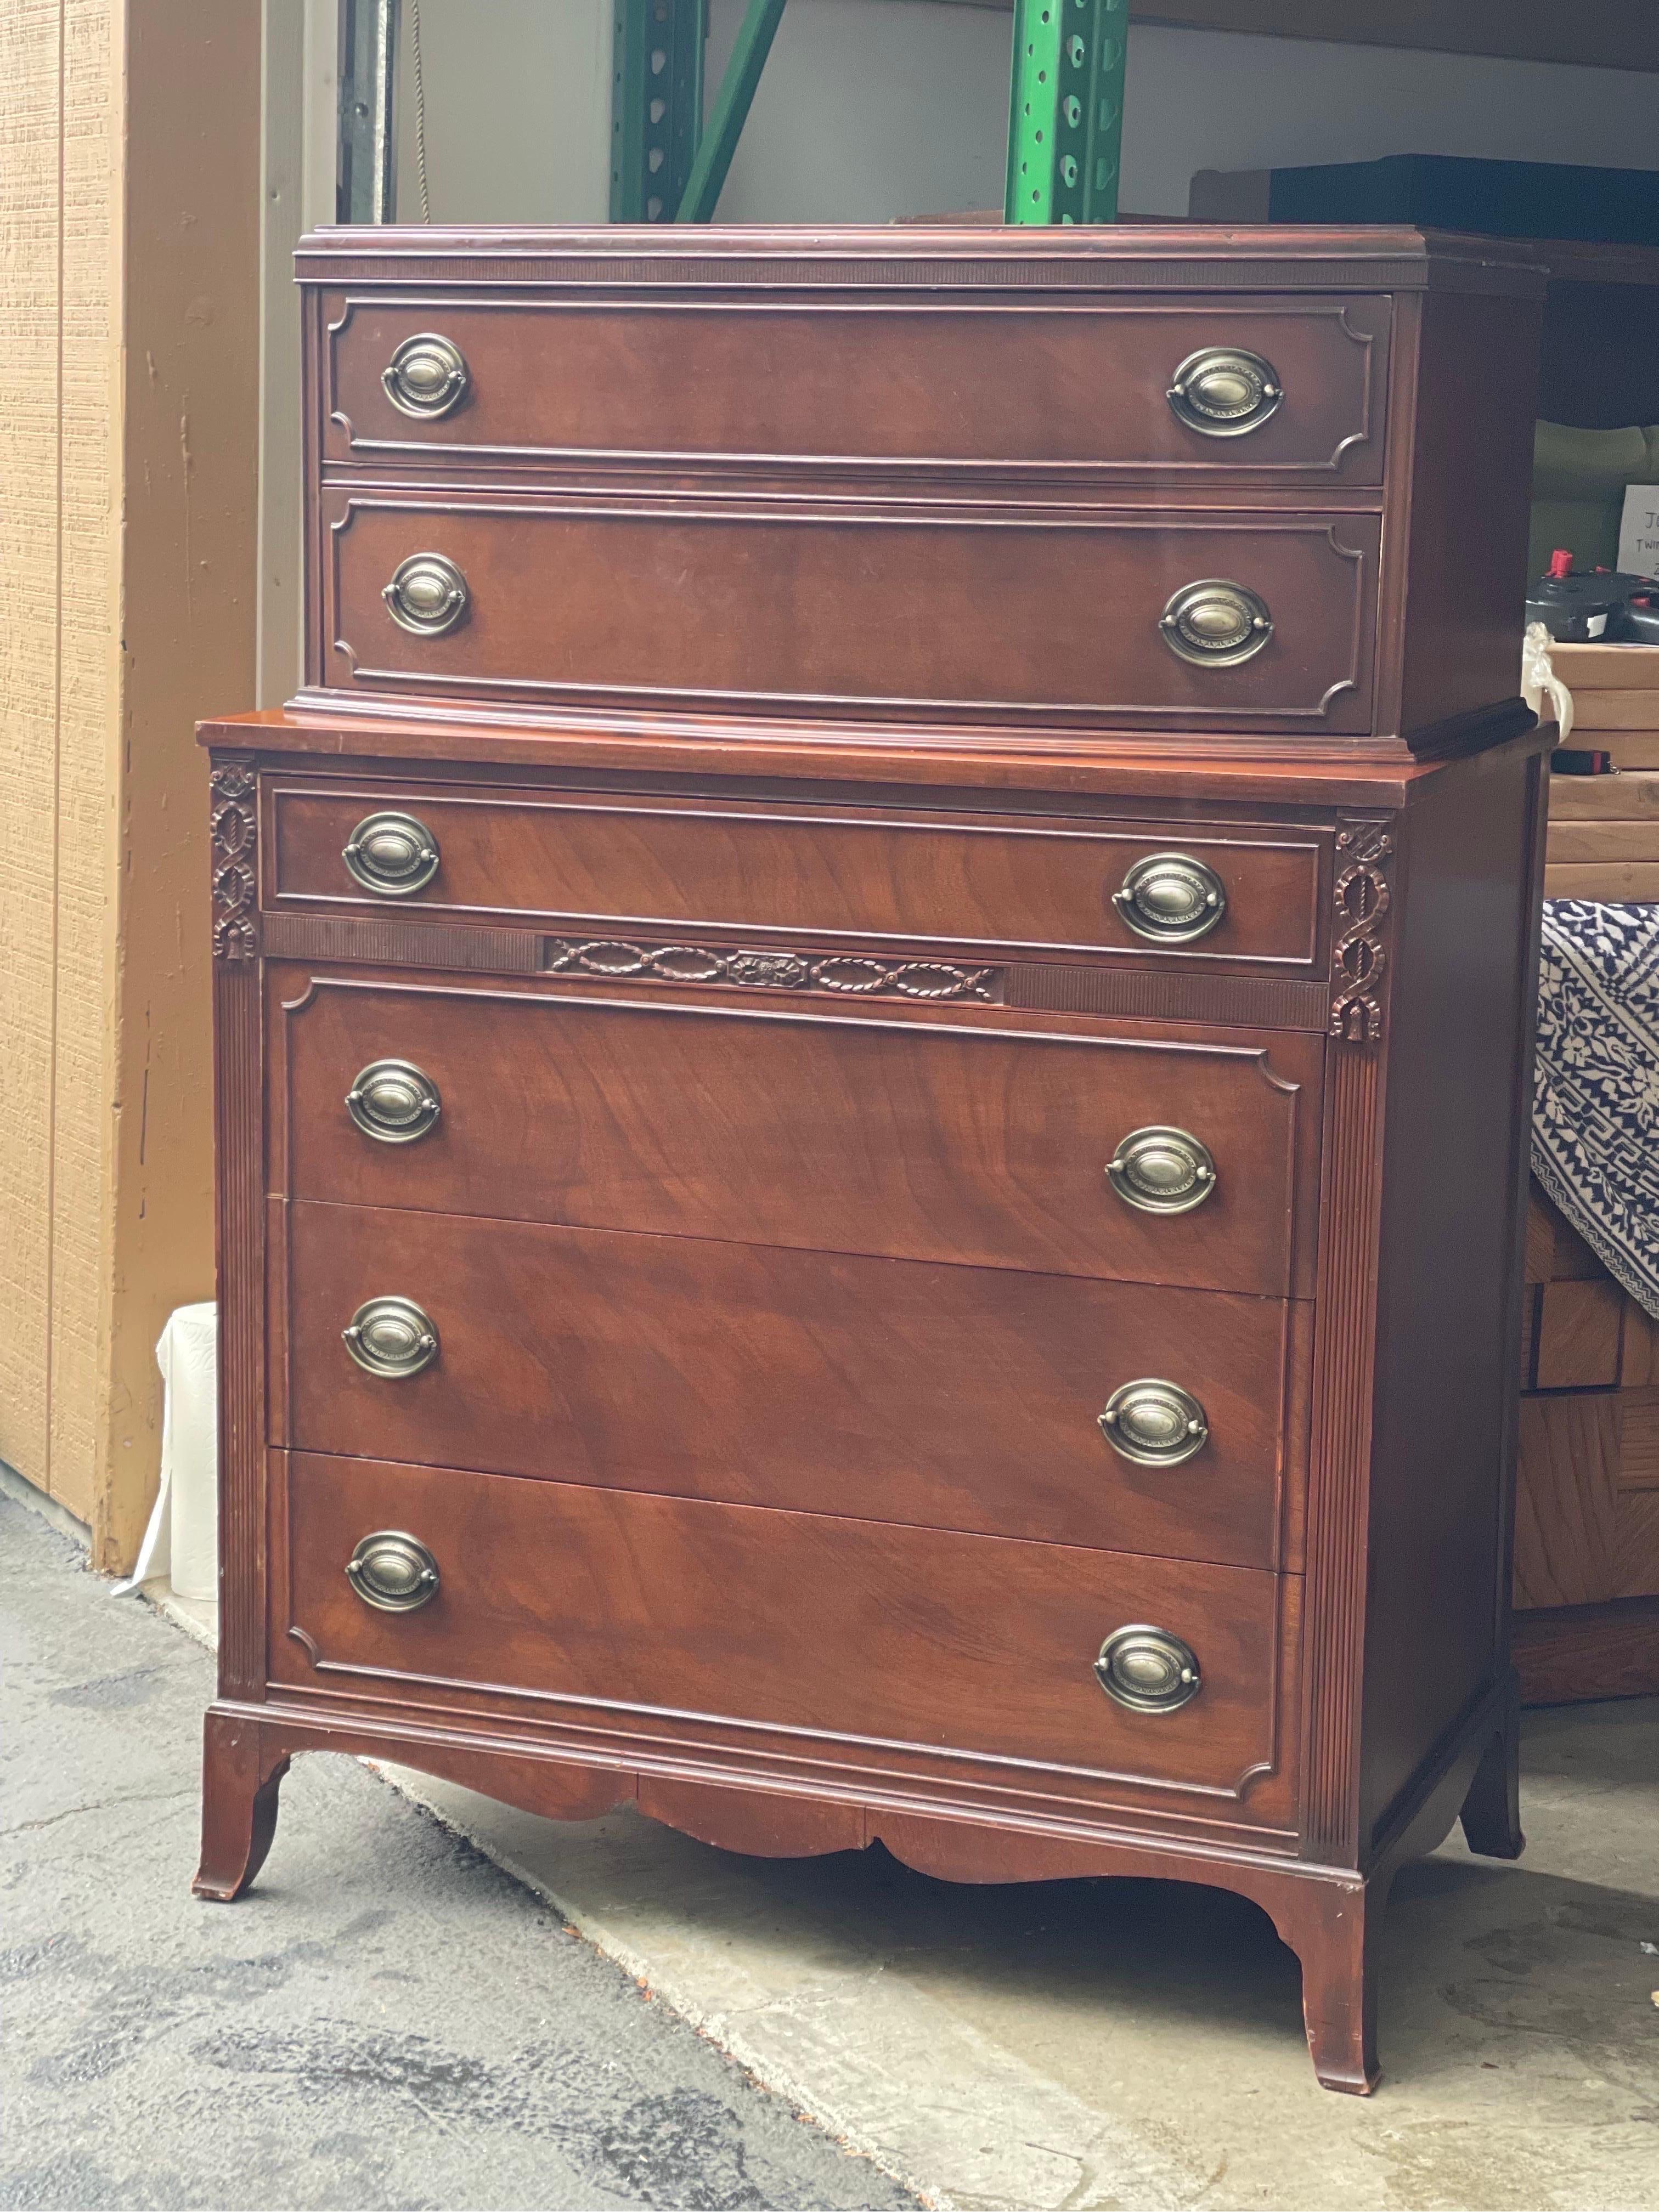 Vintage Mid-Century Modern dresser dovetail drawers cabinet storage
Dimensions. 37 1/2 W ; 53 H ; 21 D.